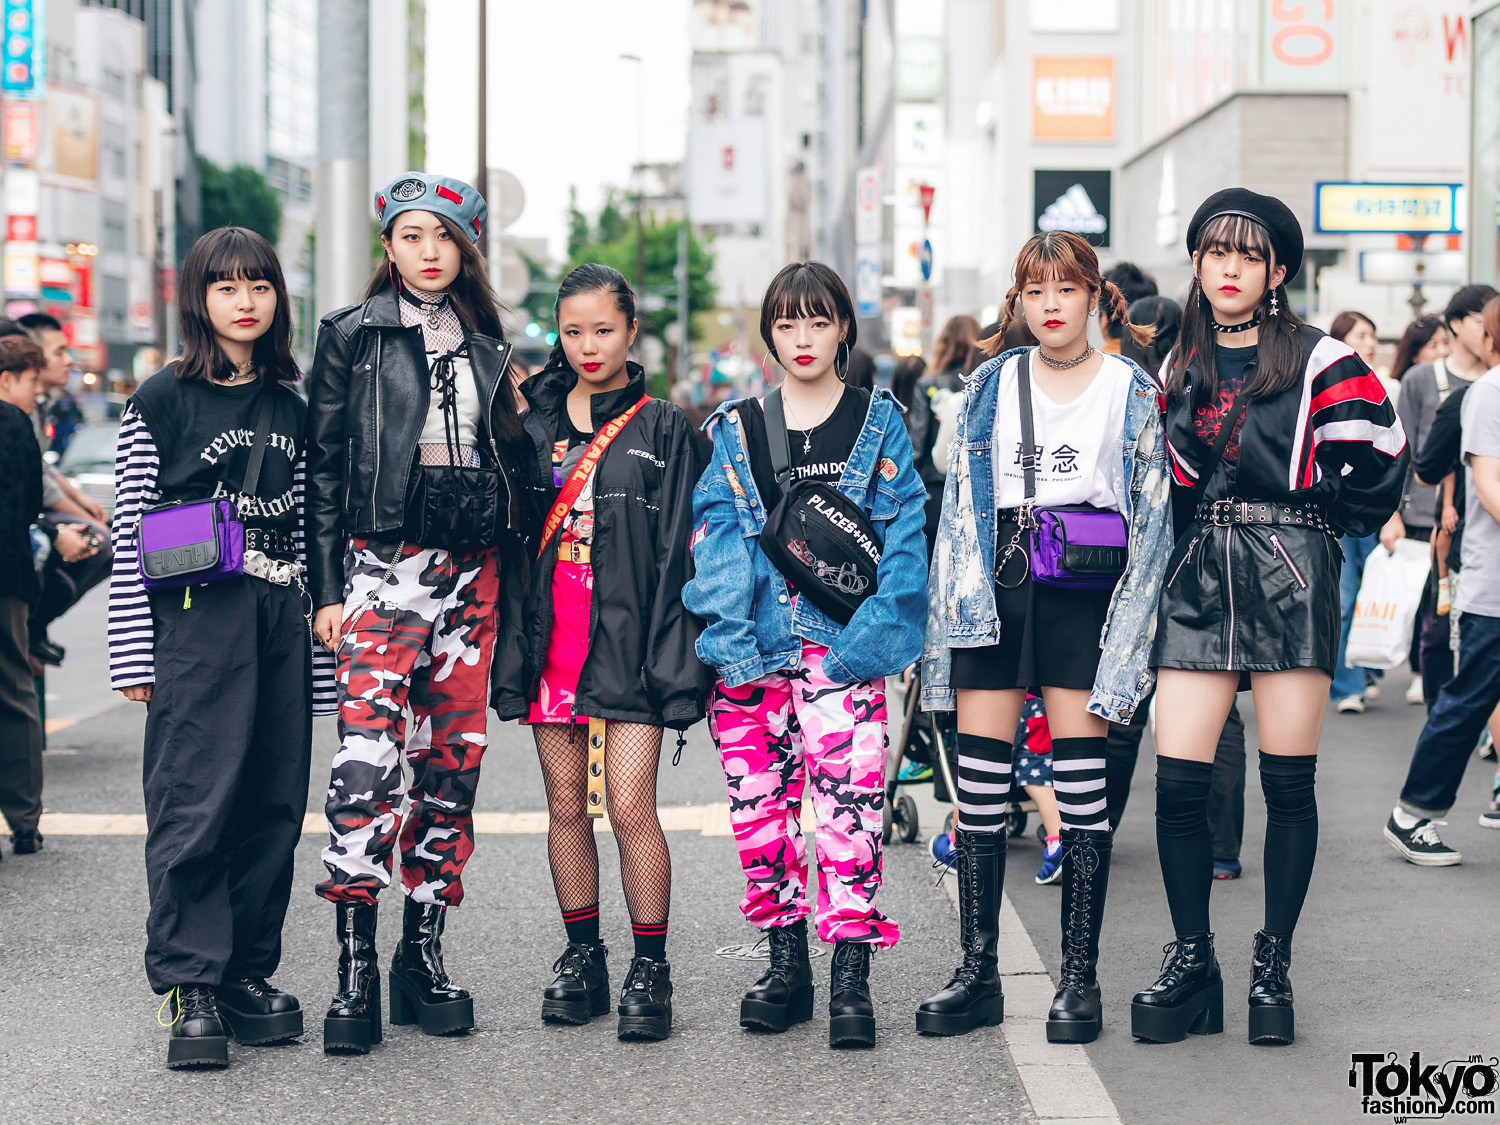 Harajuku Teen Girl Squad in Modern Japanese Streetwear Styles